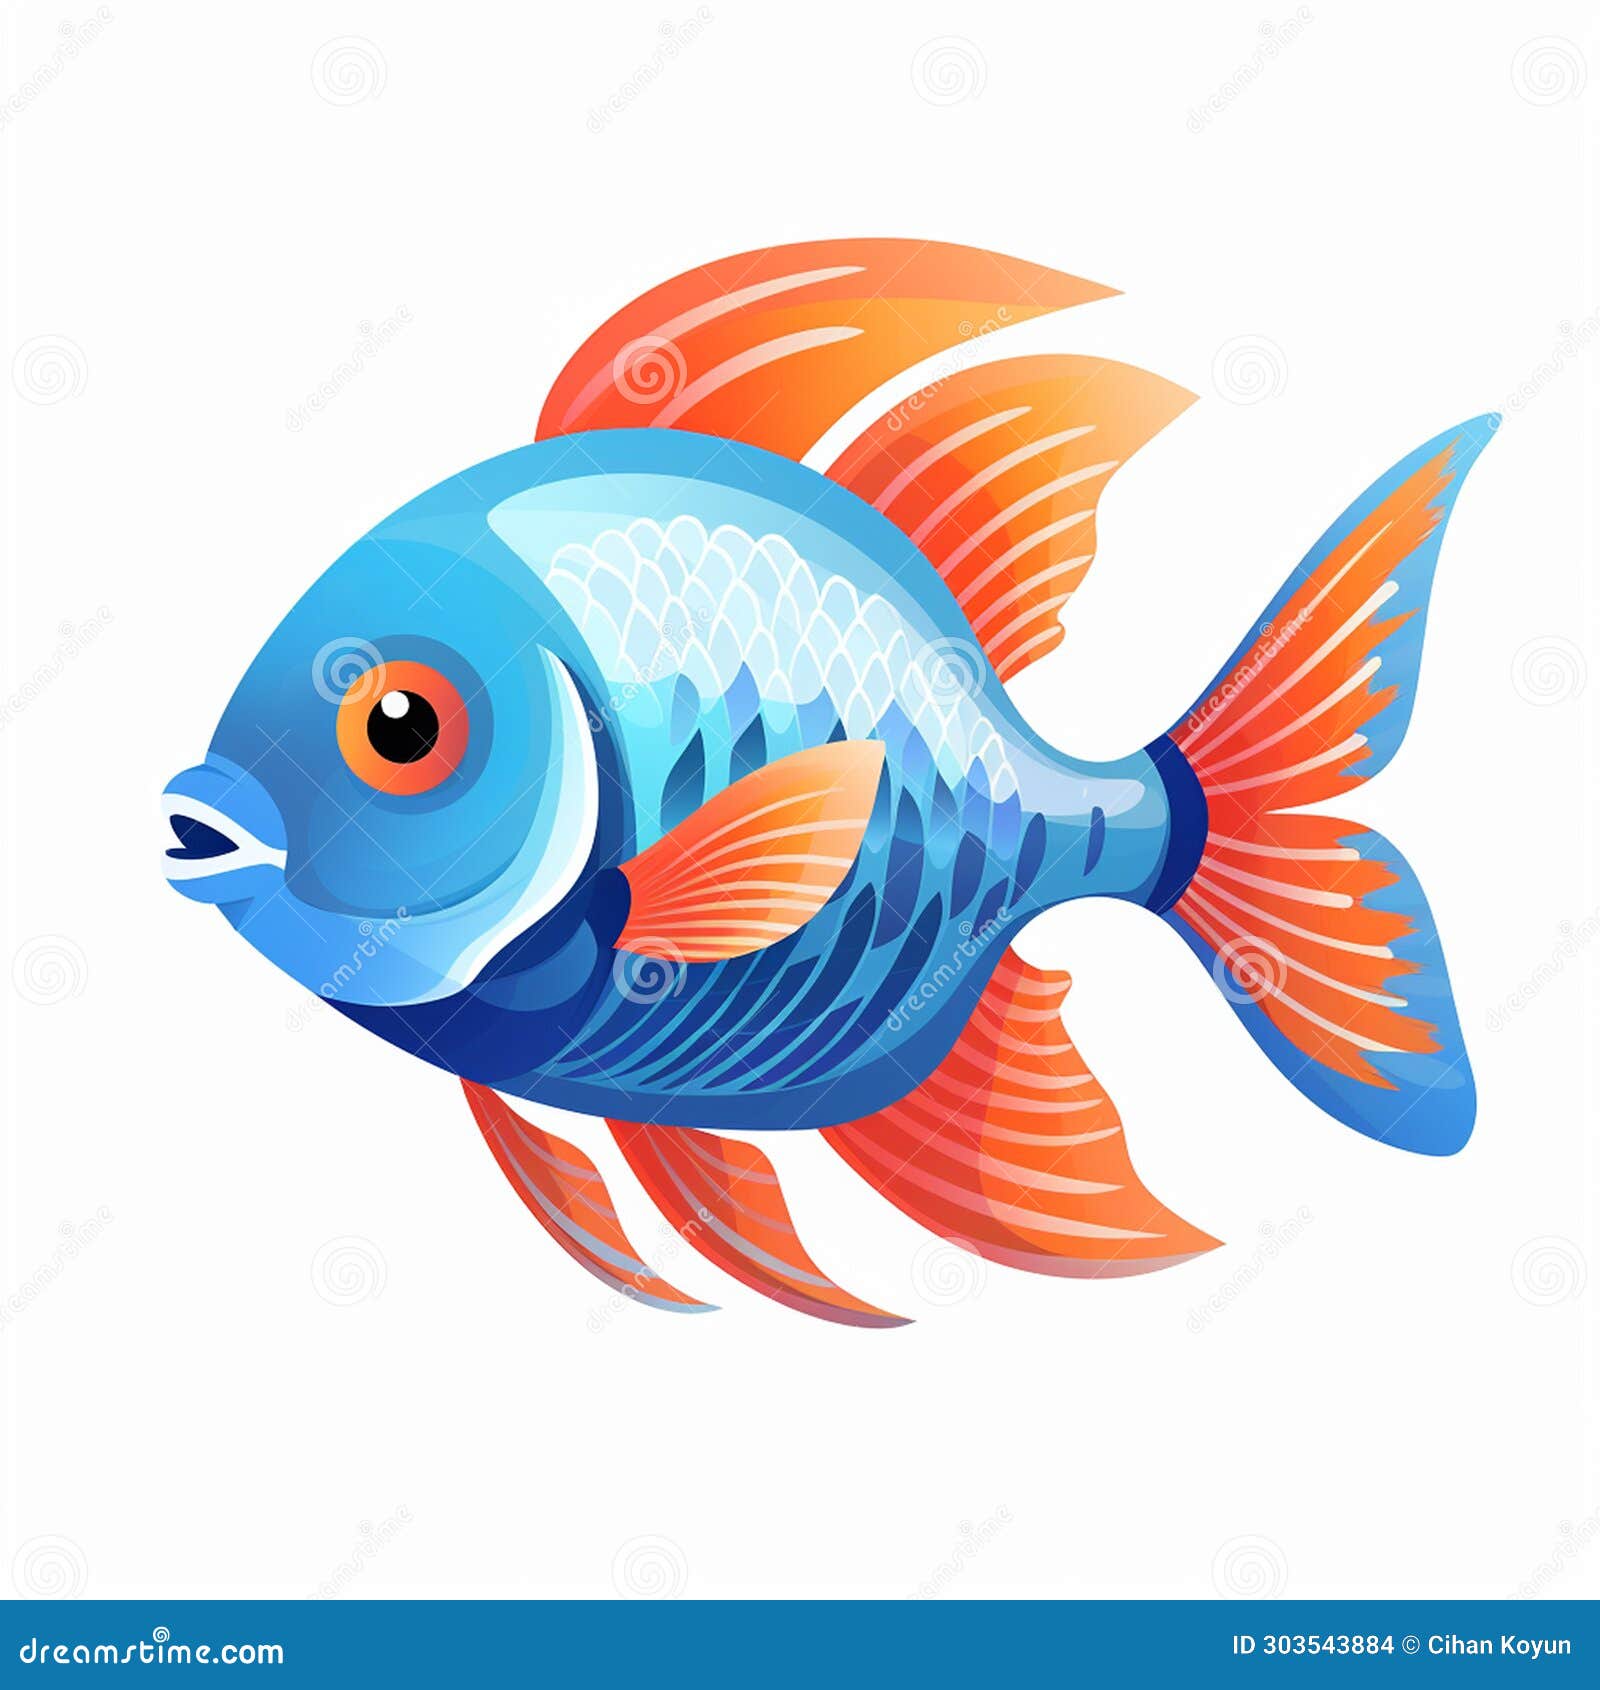 leadership blood red parrot dorado goldfish losing color rainbow trout  blue severum fish